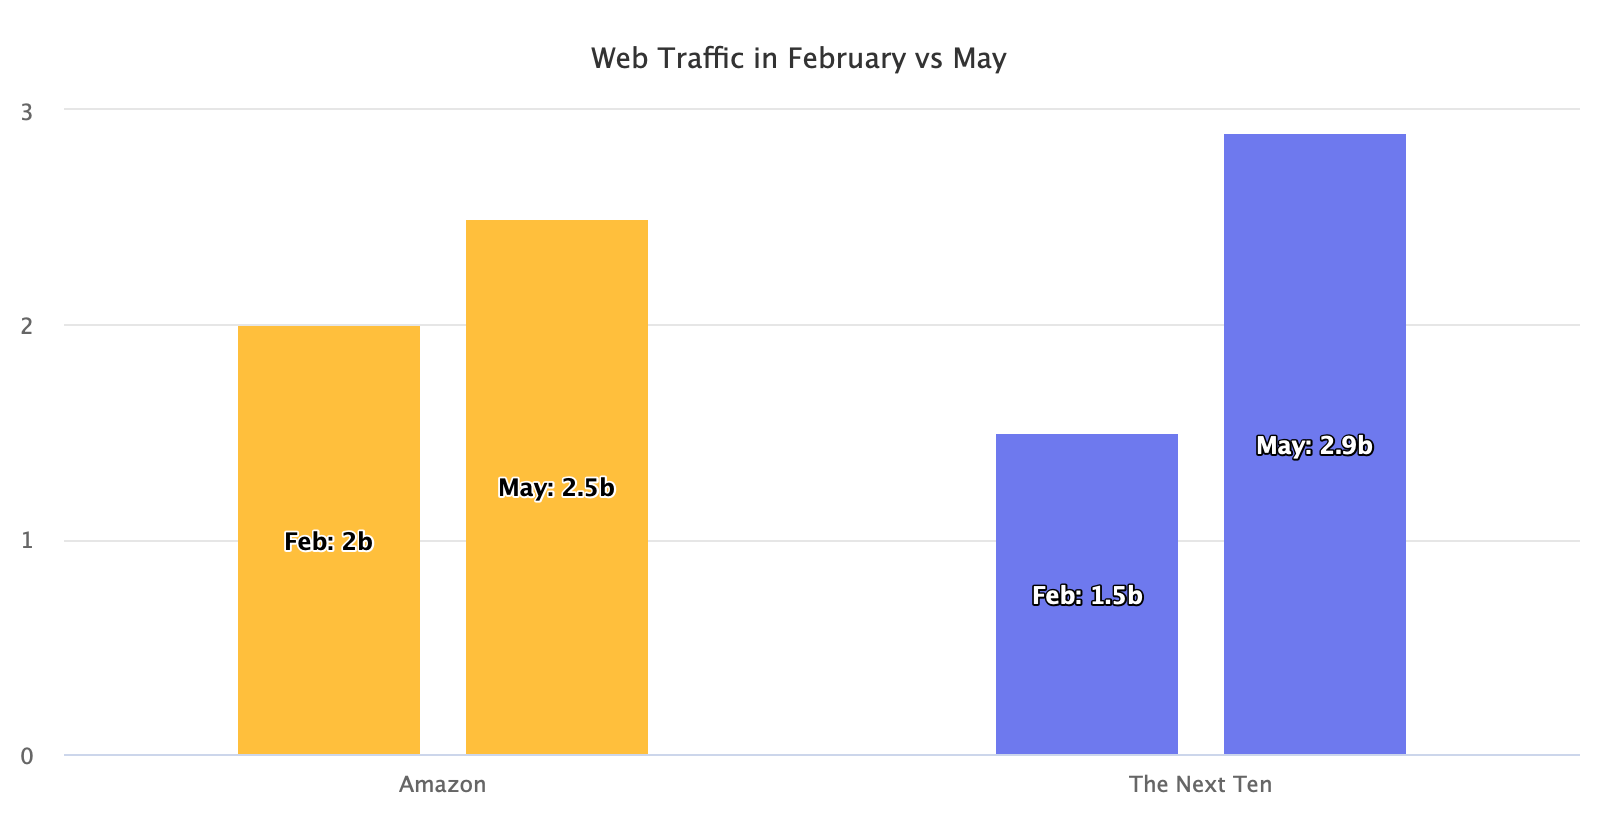 Web traffic in February vs May